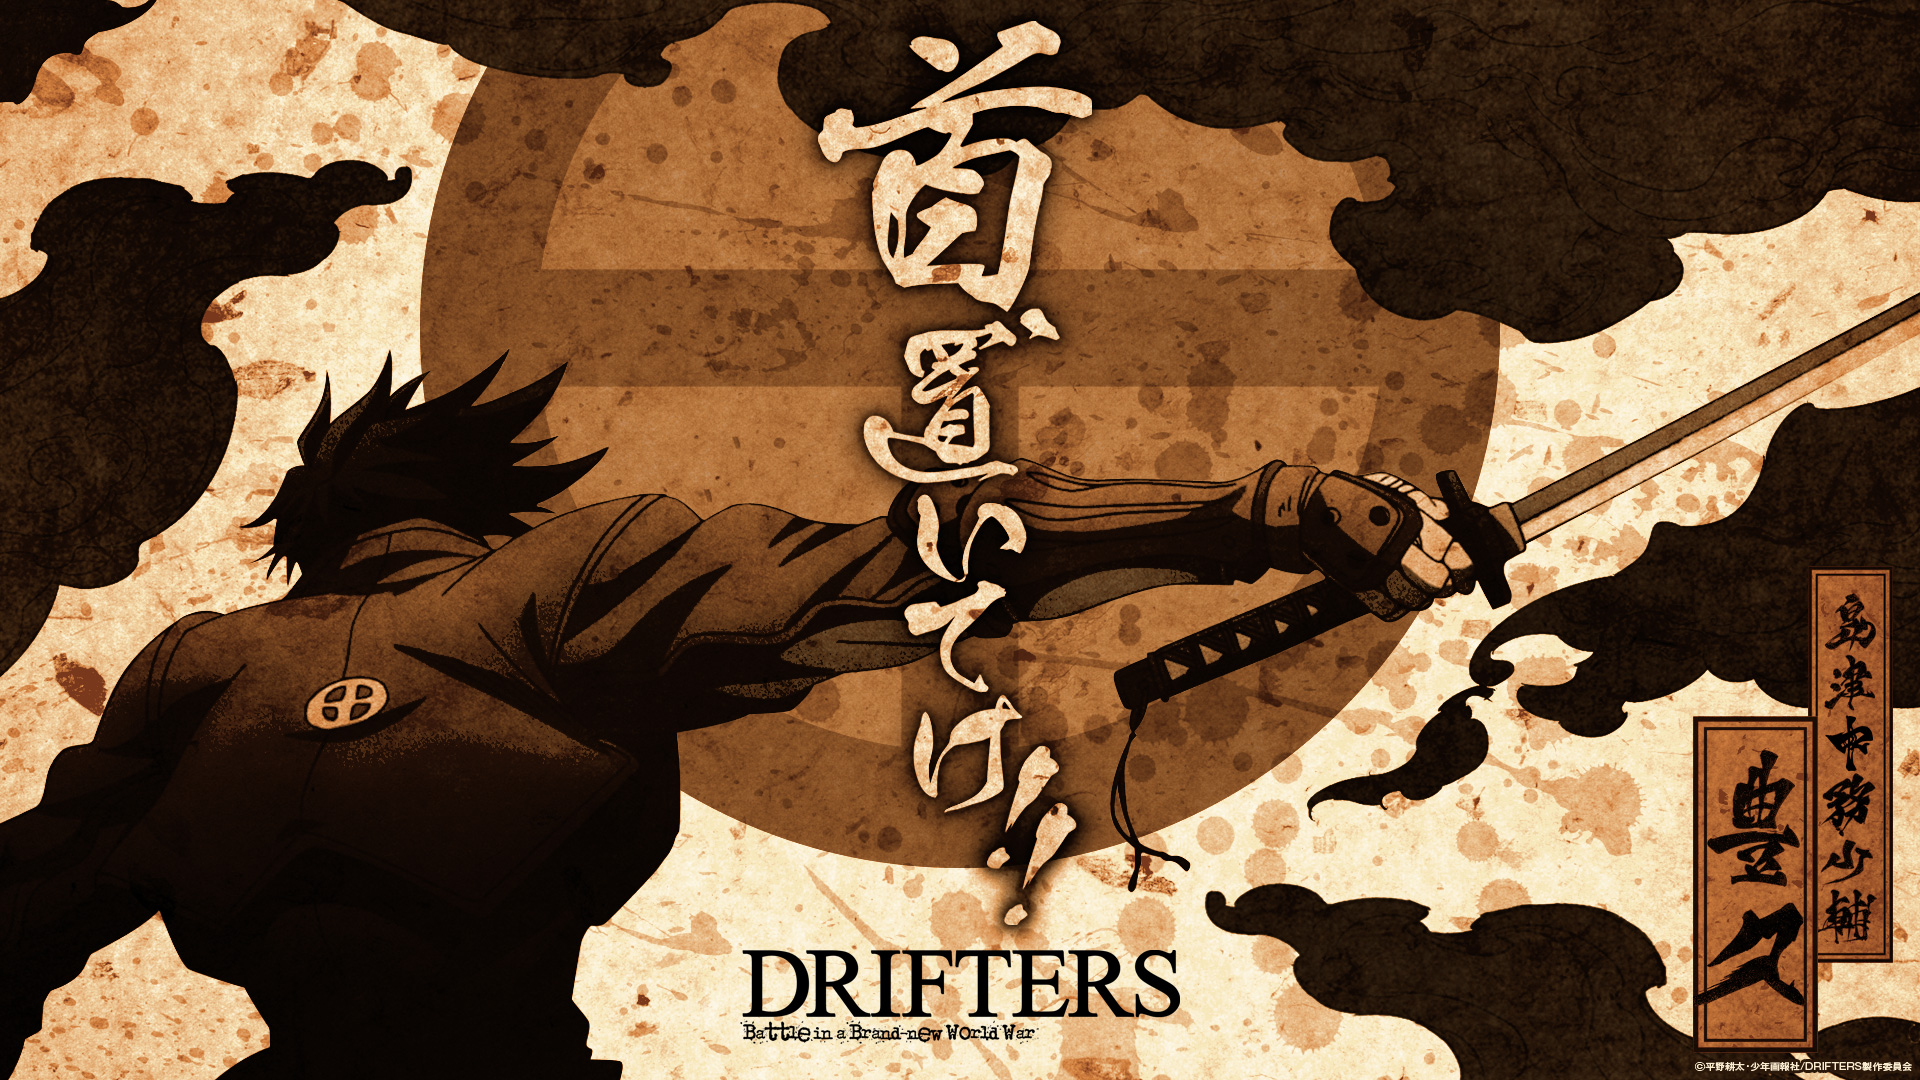 Anime Drifters 4k Ultra HD Wallpaper by shibuyawarrior